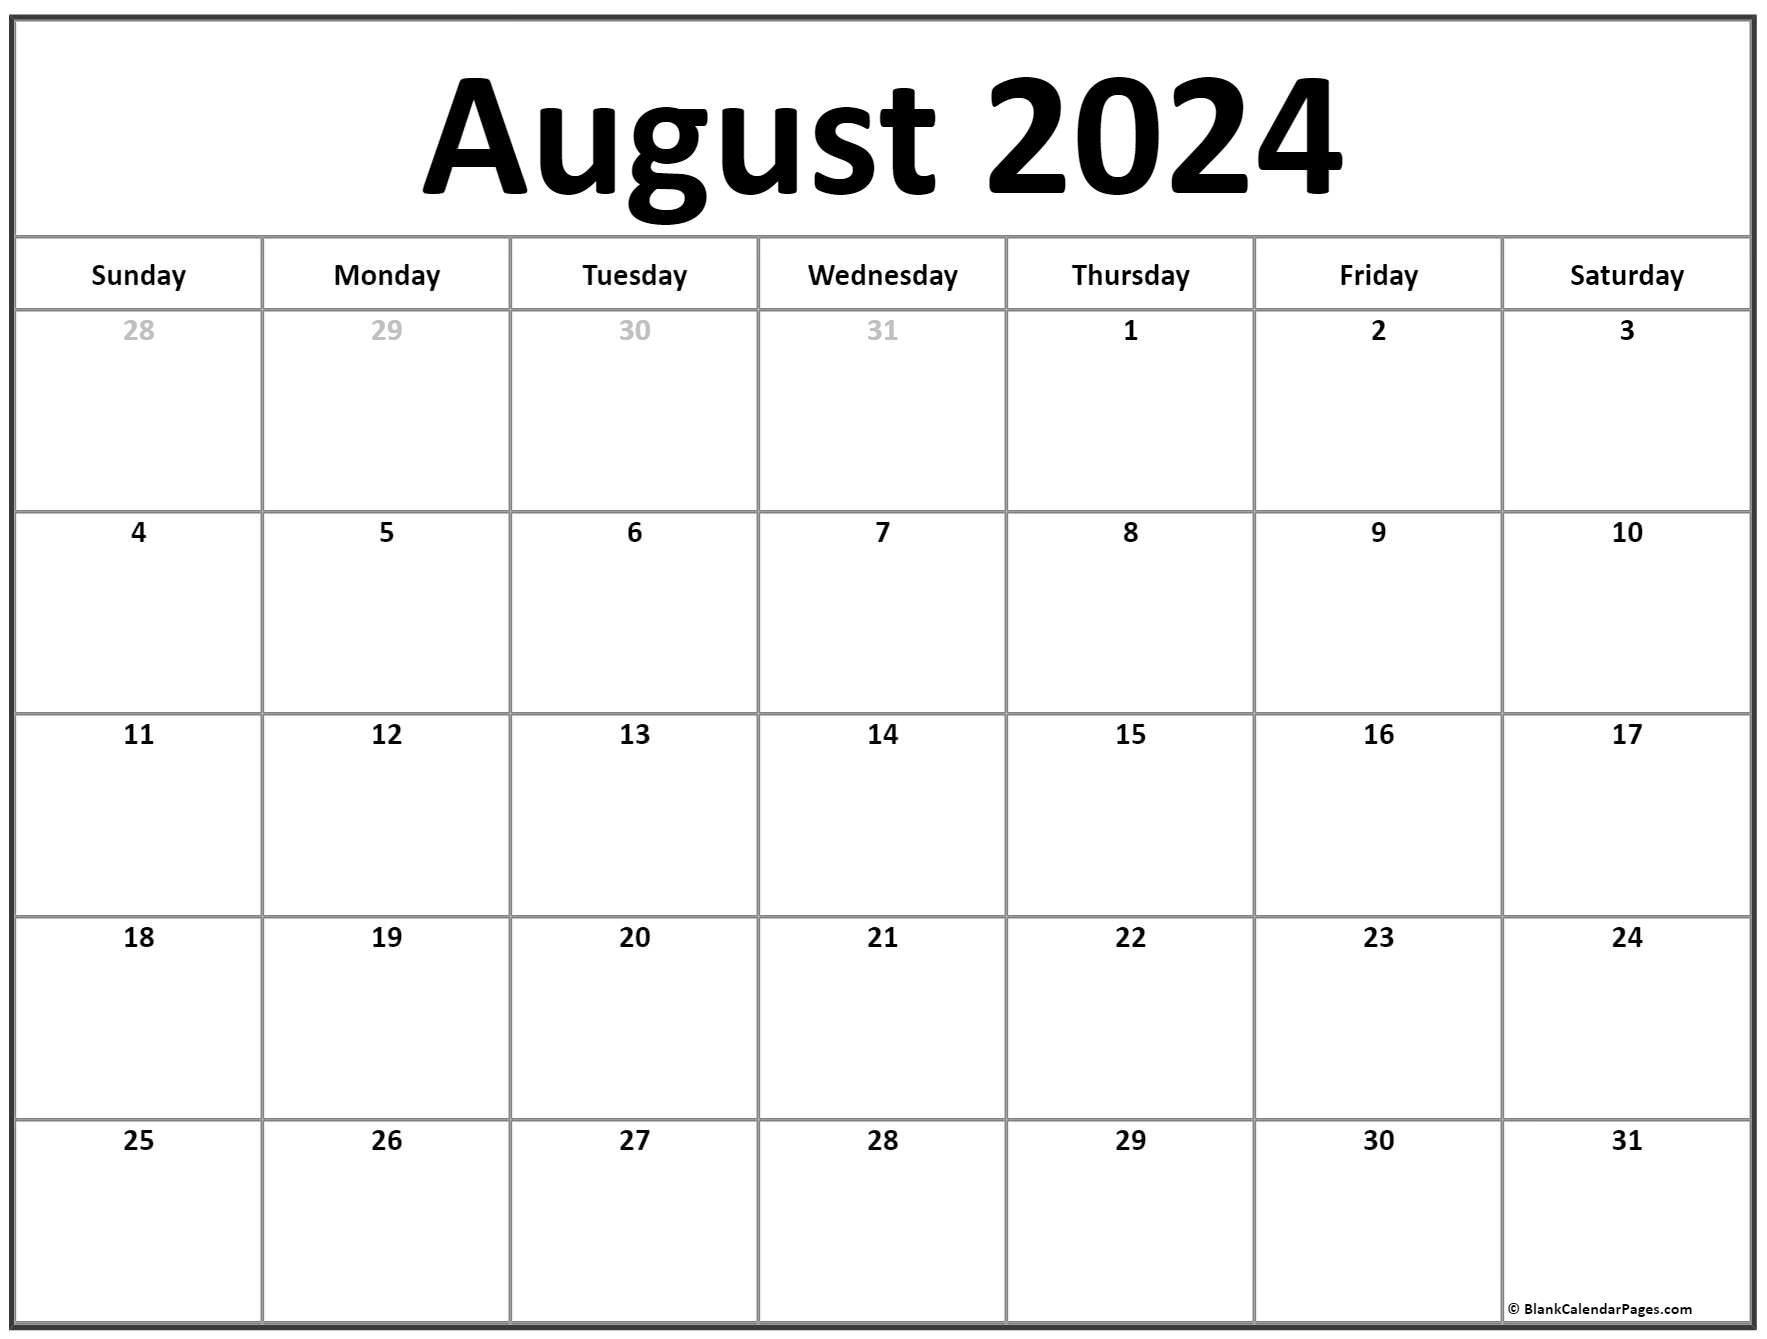 Free Calendar August 2022 August 2022 Calendar | Free Printable Calendar Templates